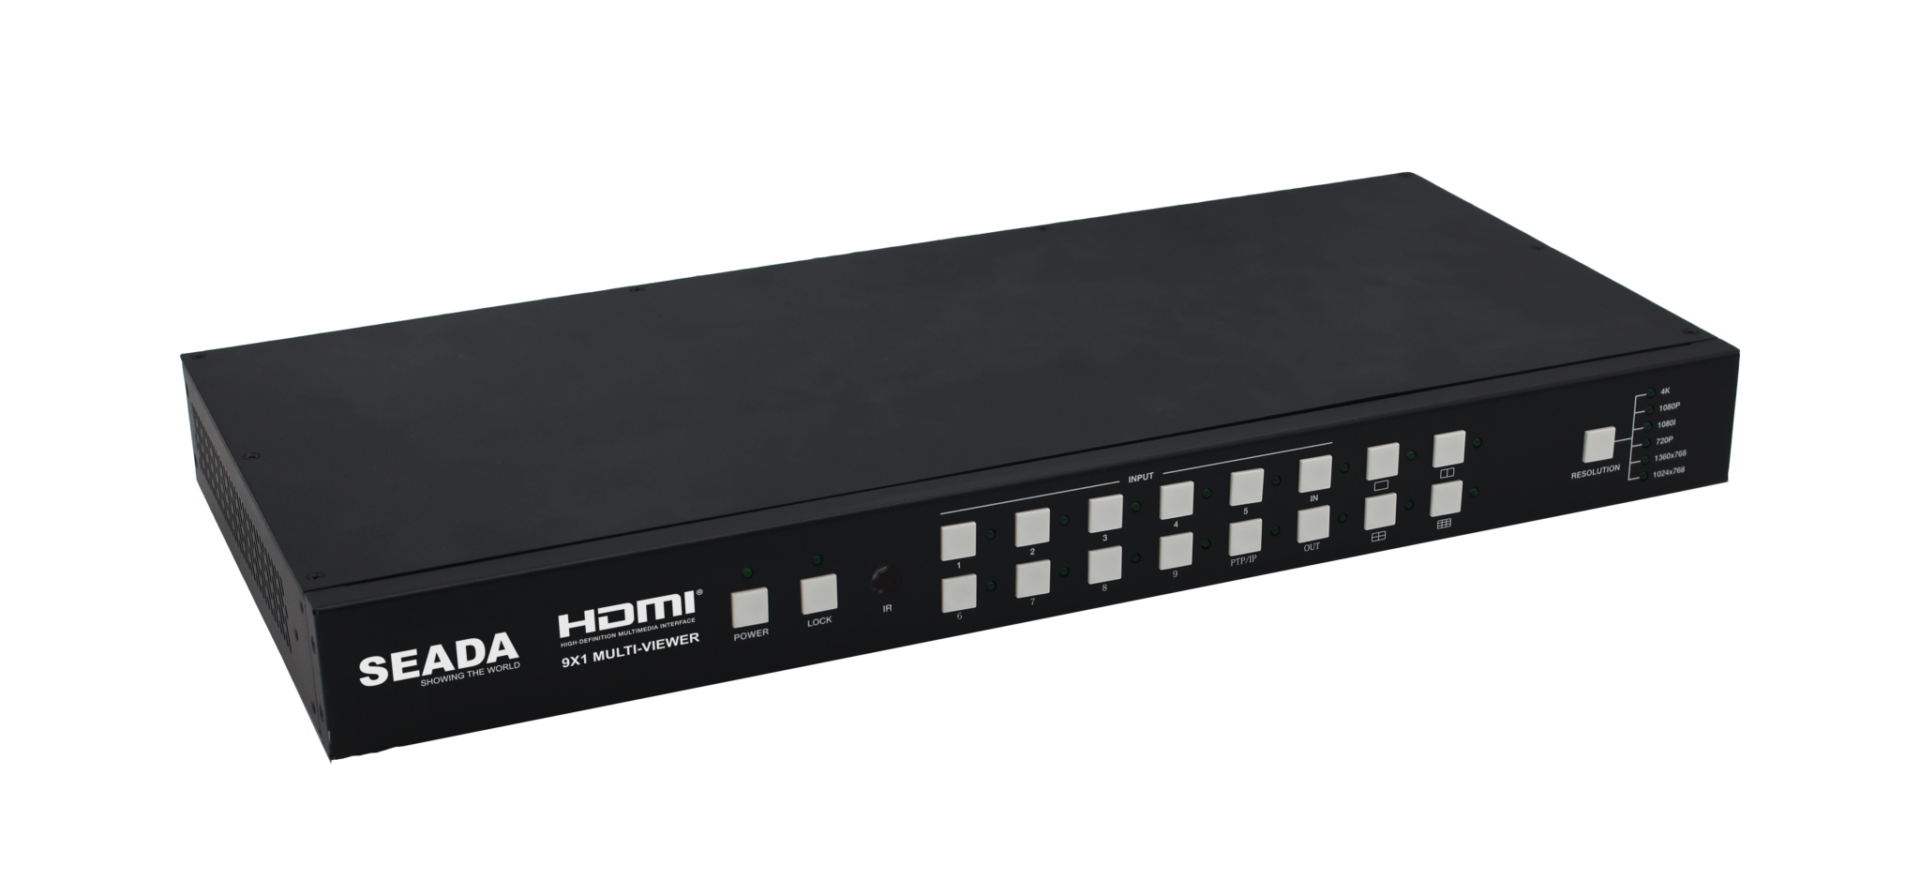 SD-MV-0901 HDMI Seamless Switcher with Multi-view